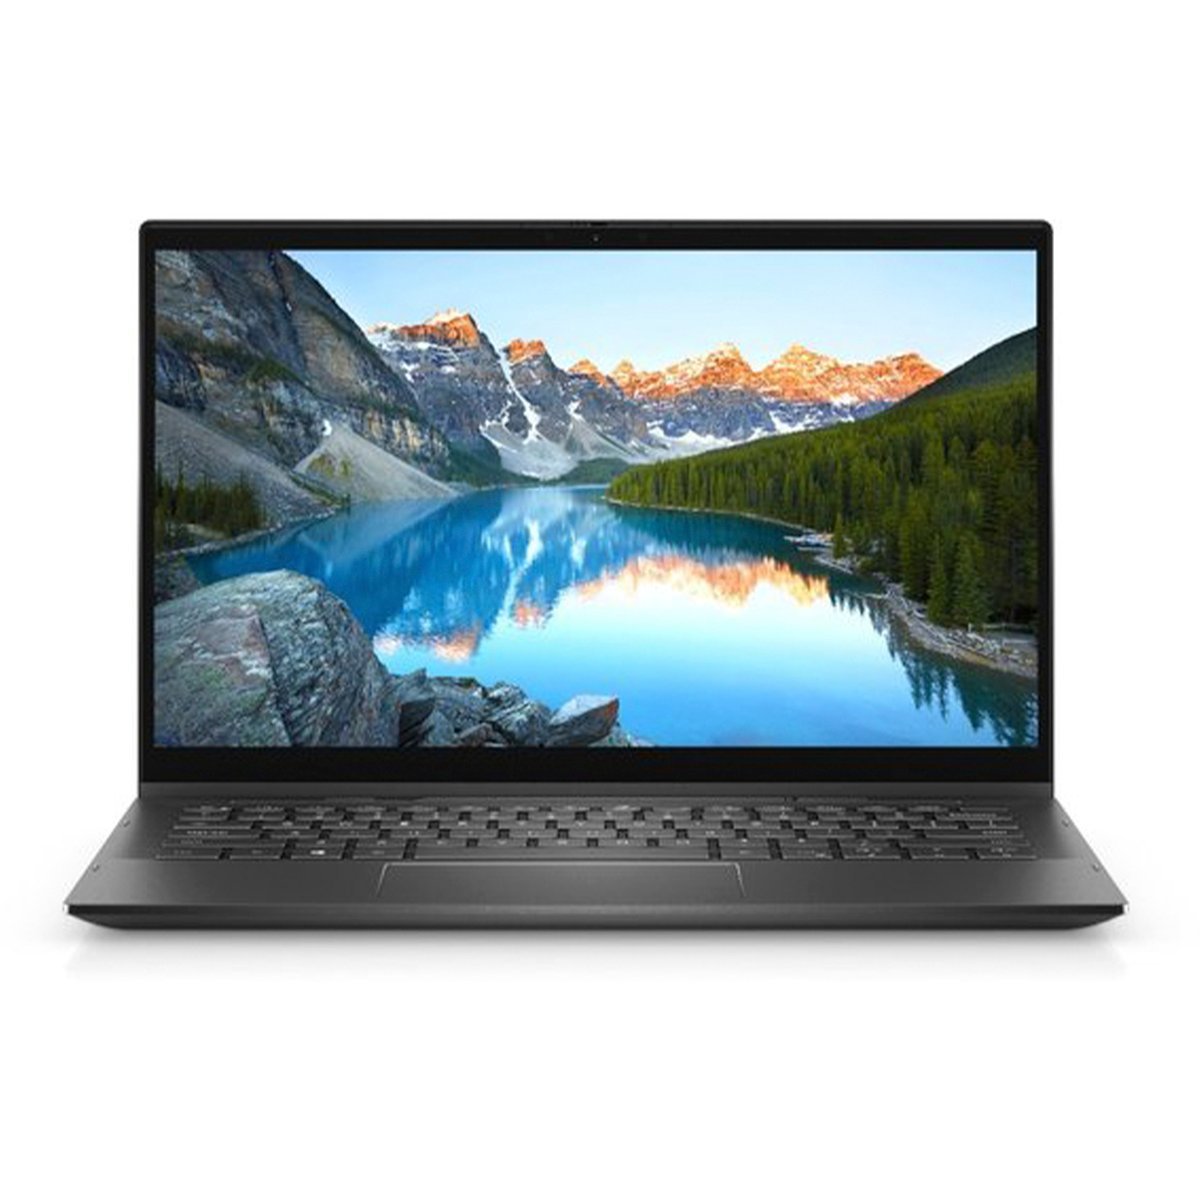 Dell Inspiron 13 7306 (2-in-1)Convertible Laptop ,Intel Core i7-1165G7,16GB RAM,1TB SSD, Intel(R) UHD Graphics 620,Windows10,13.3inch,Black,English-Arabic Keyboard